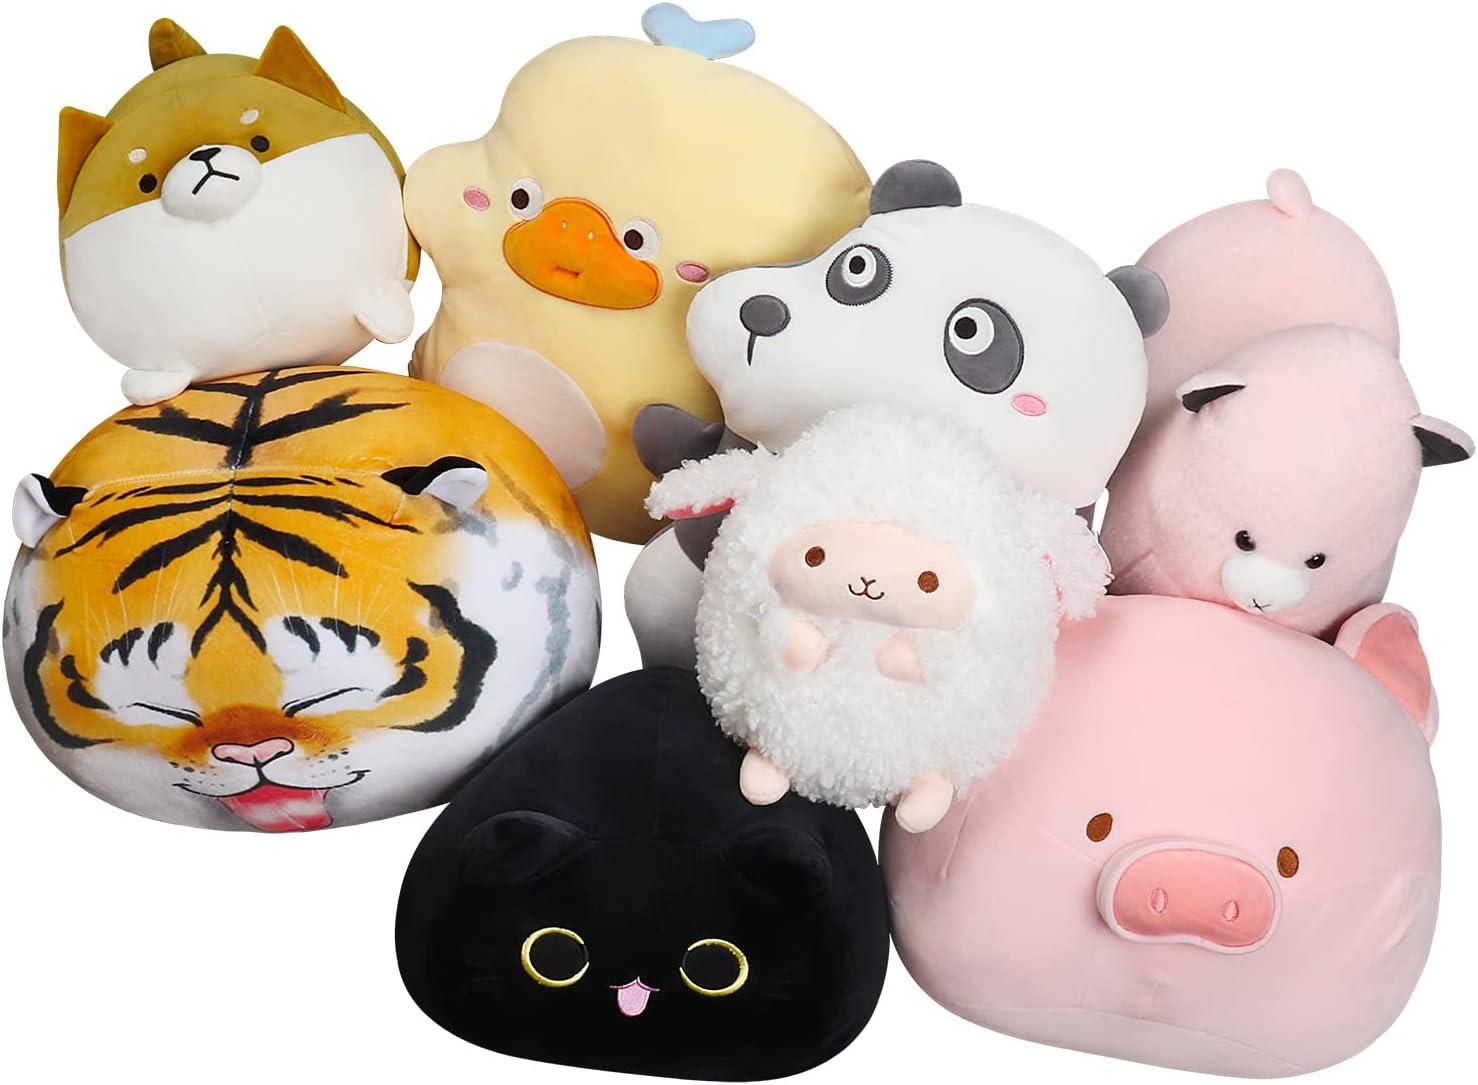 Shiba Inu Plush Toy Stuffed Animal Cushion Doll Kawaii Plush Corgi Toy  Cuddly Shiba Inu Plush Pillow Chubby Plush Soft Toy Decorative Pillow for  Boys Girls Children's Day/New Year Gift 15.7 inch